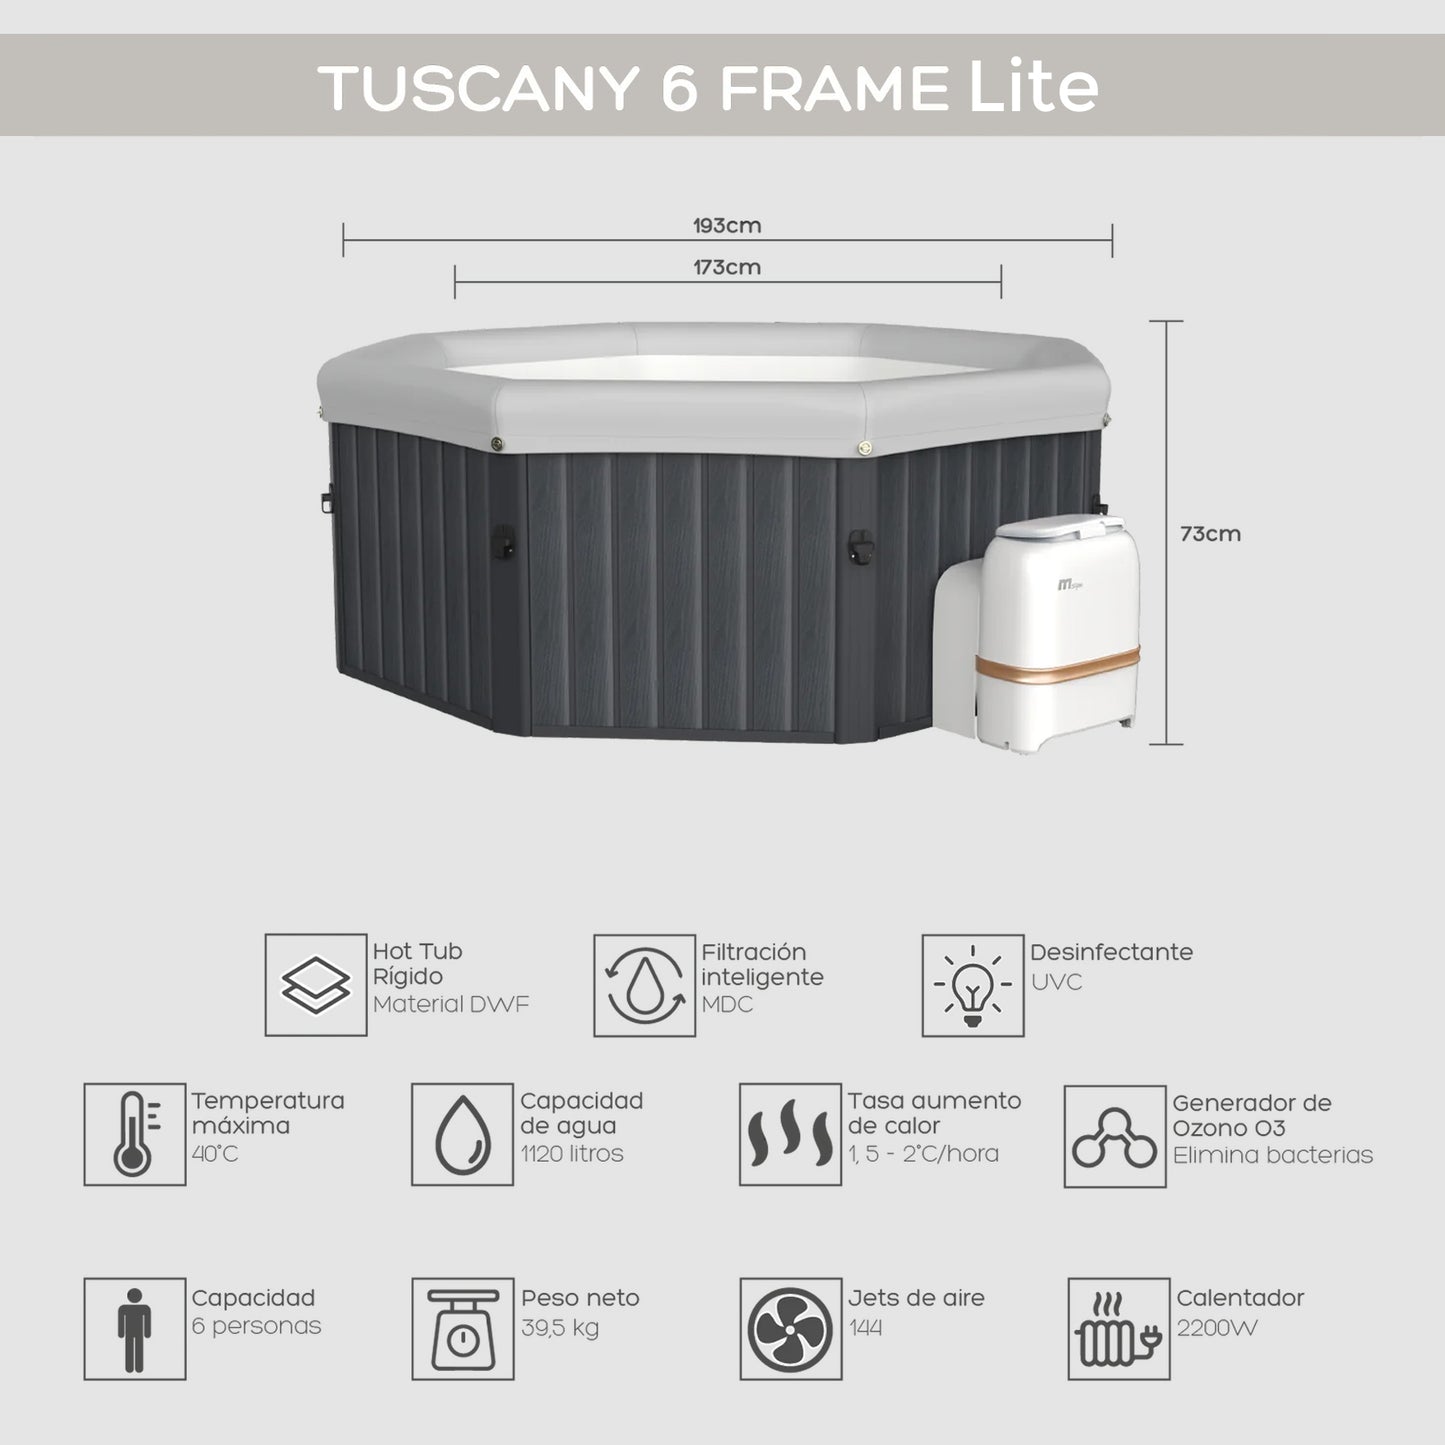 Hot Tub Tuscany Lite 6 Frame (Disponible en Tienda)